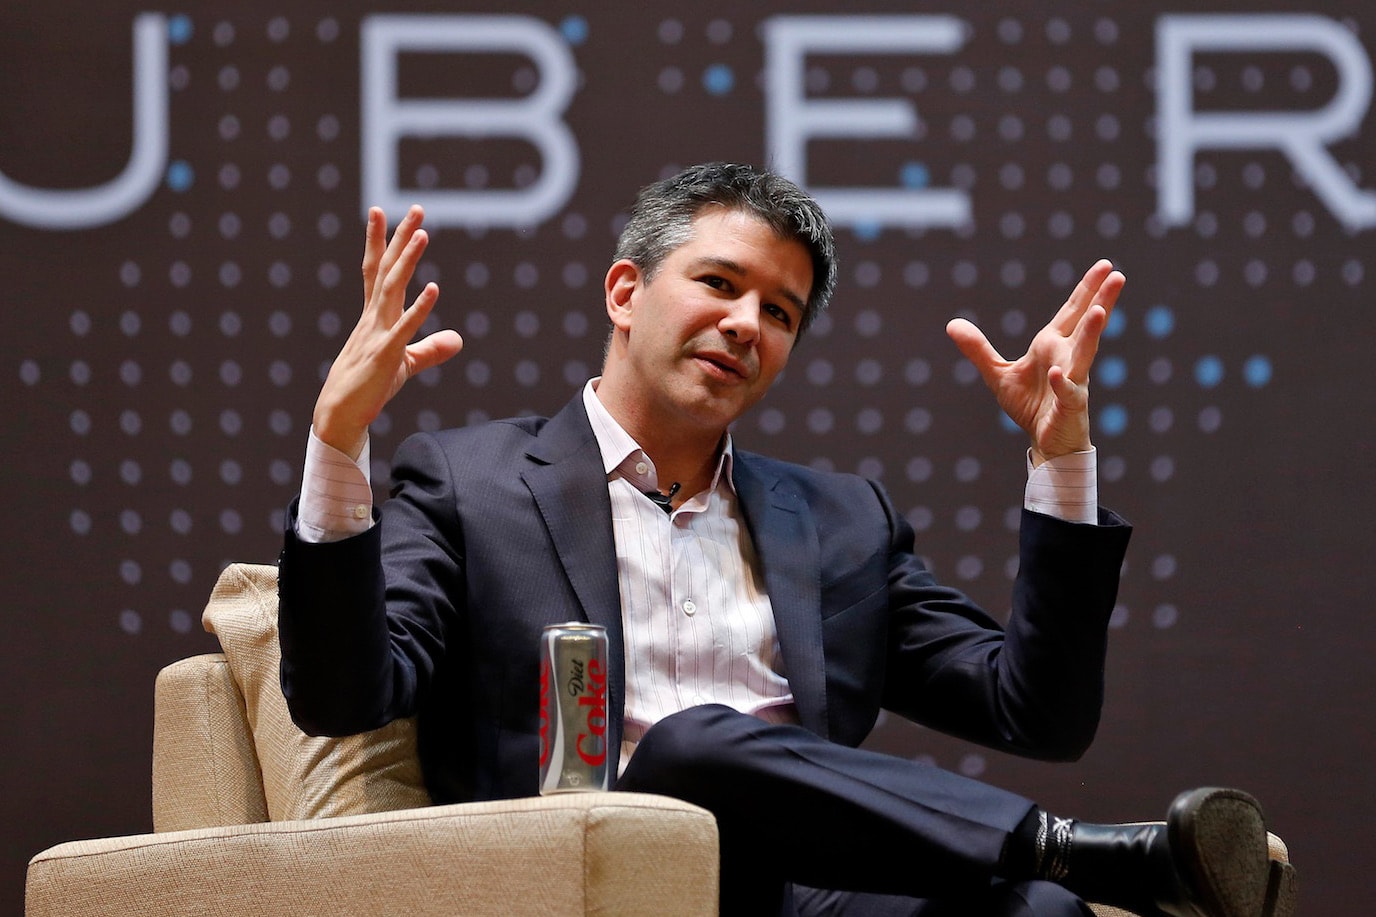 Uber CEO Travis Kalanick 鼓勵員工之間發生性行為？